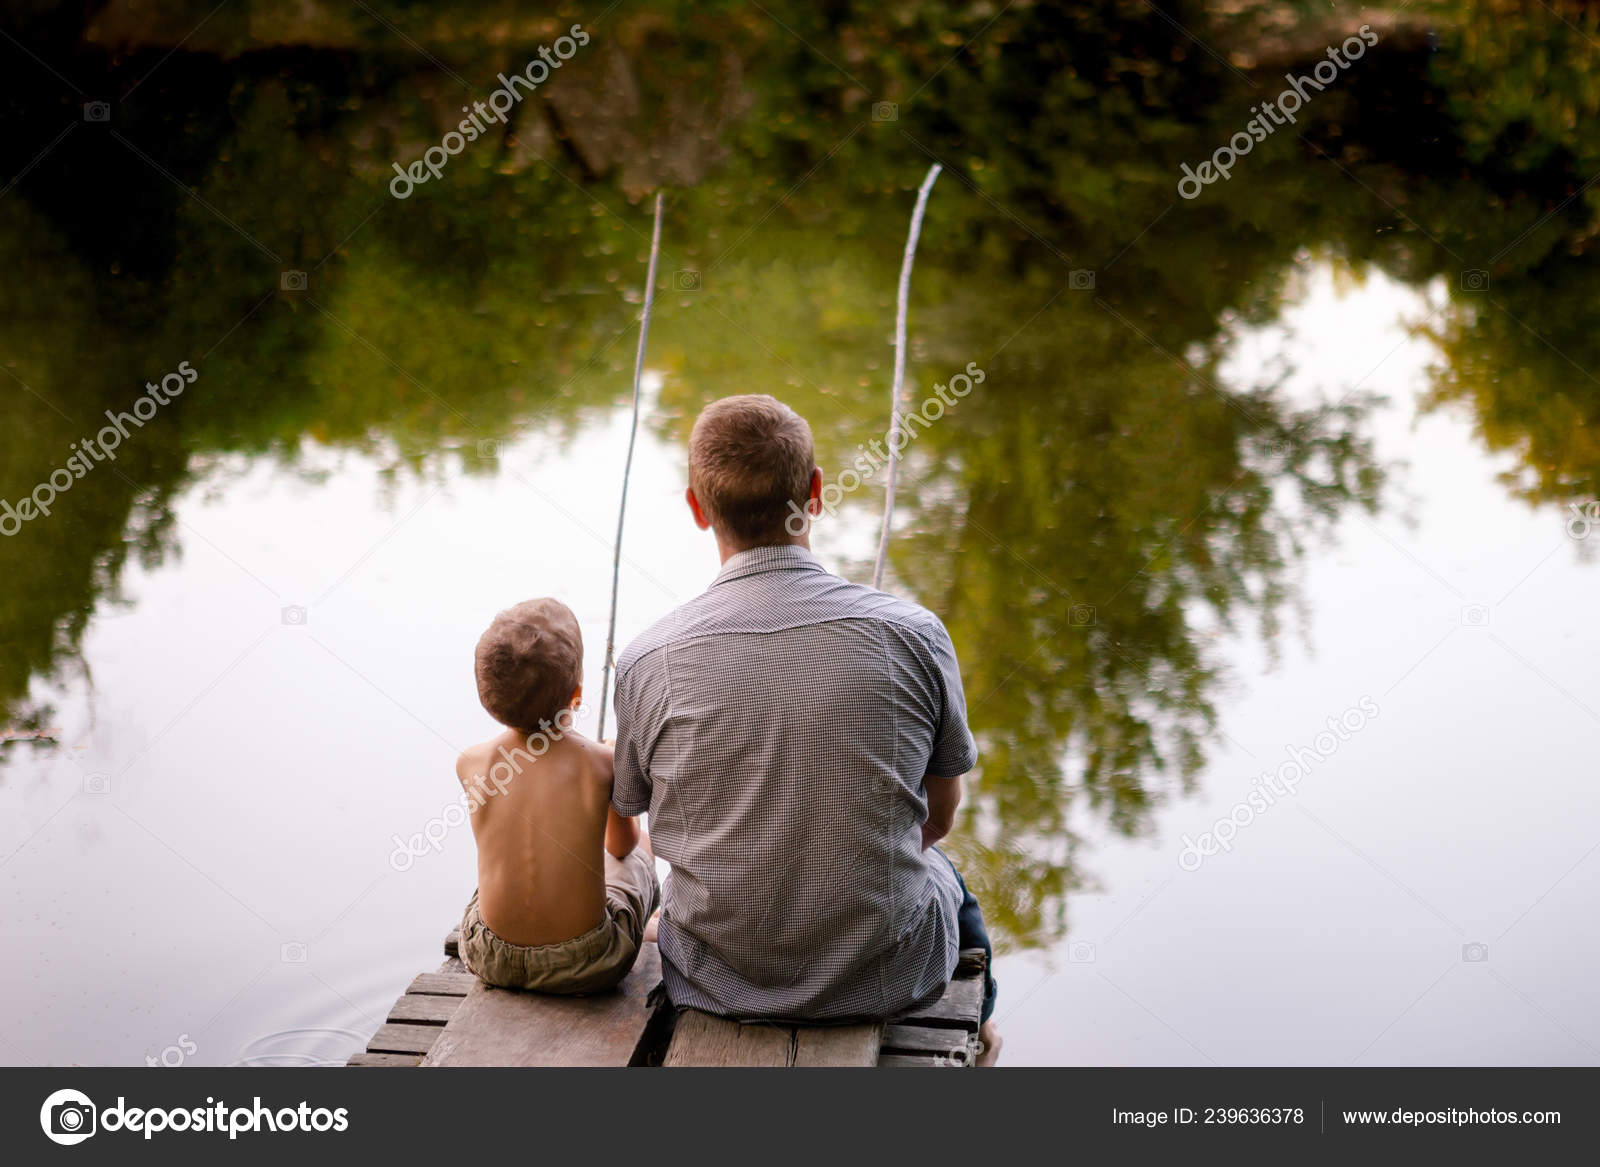 https://st4.depositphotos.com/1520772/23963/i/1600/depositphotos_239636378-stock-photo-dad-son-fishing-outdoors-view.jpg